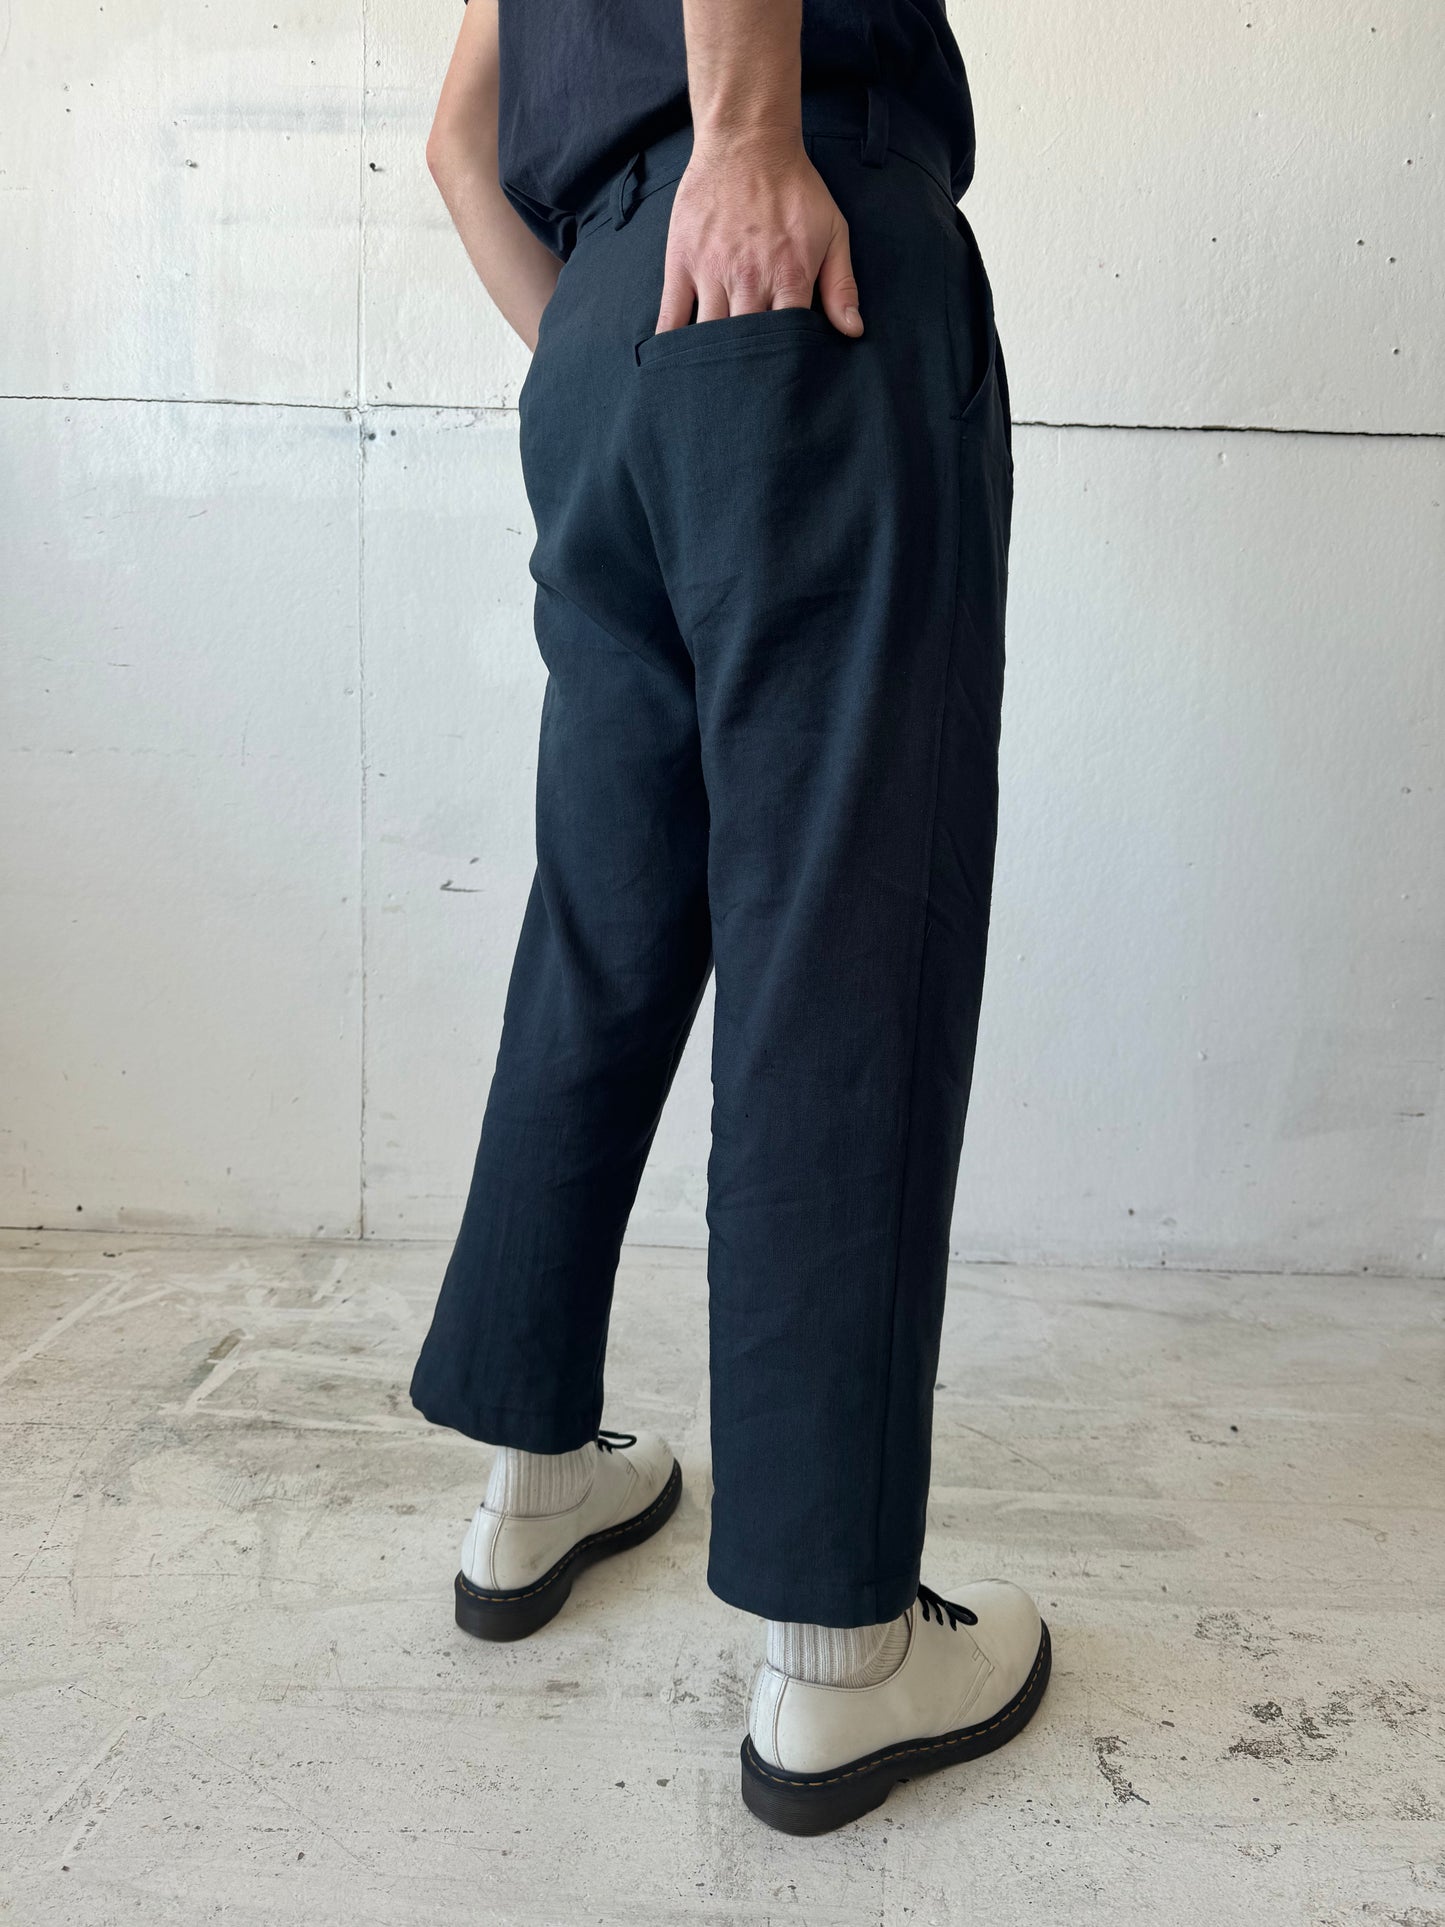 Dress Pants in Navy Wool/Linen Gabardine